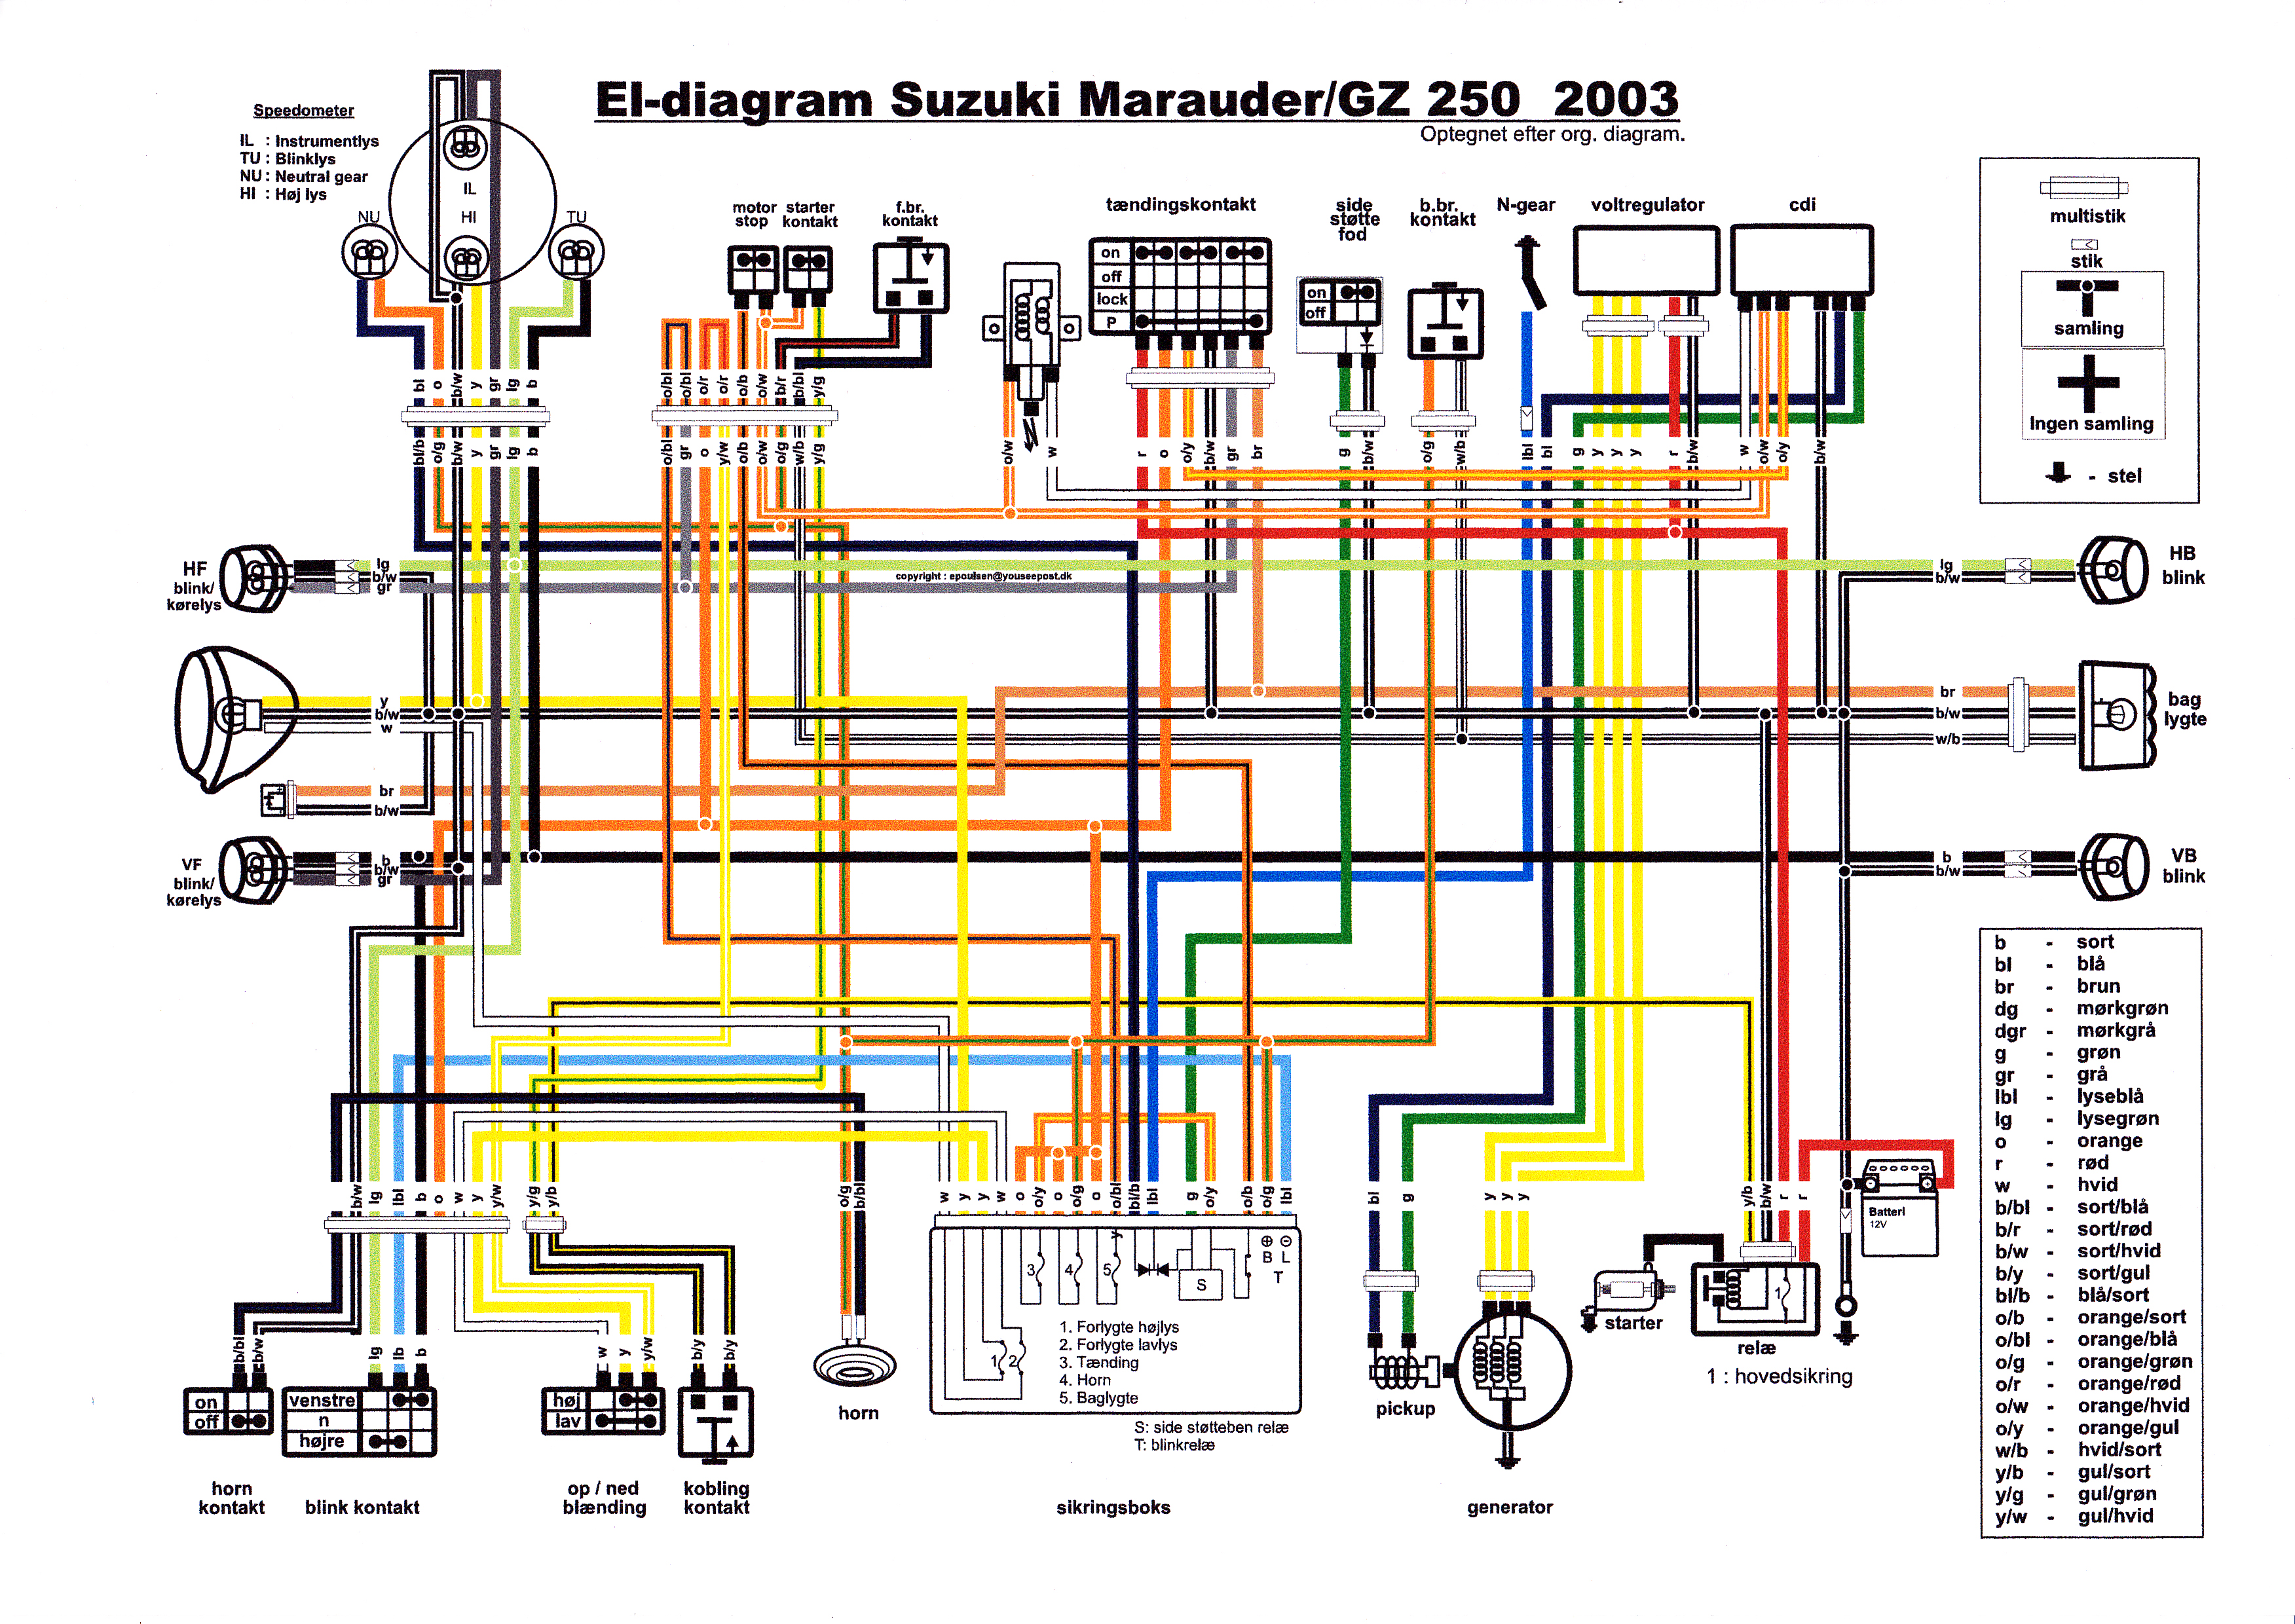 Diagram Suzuki GZ 250 2003.jpg